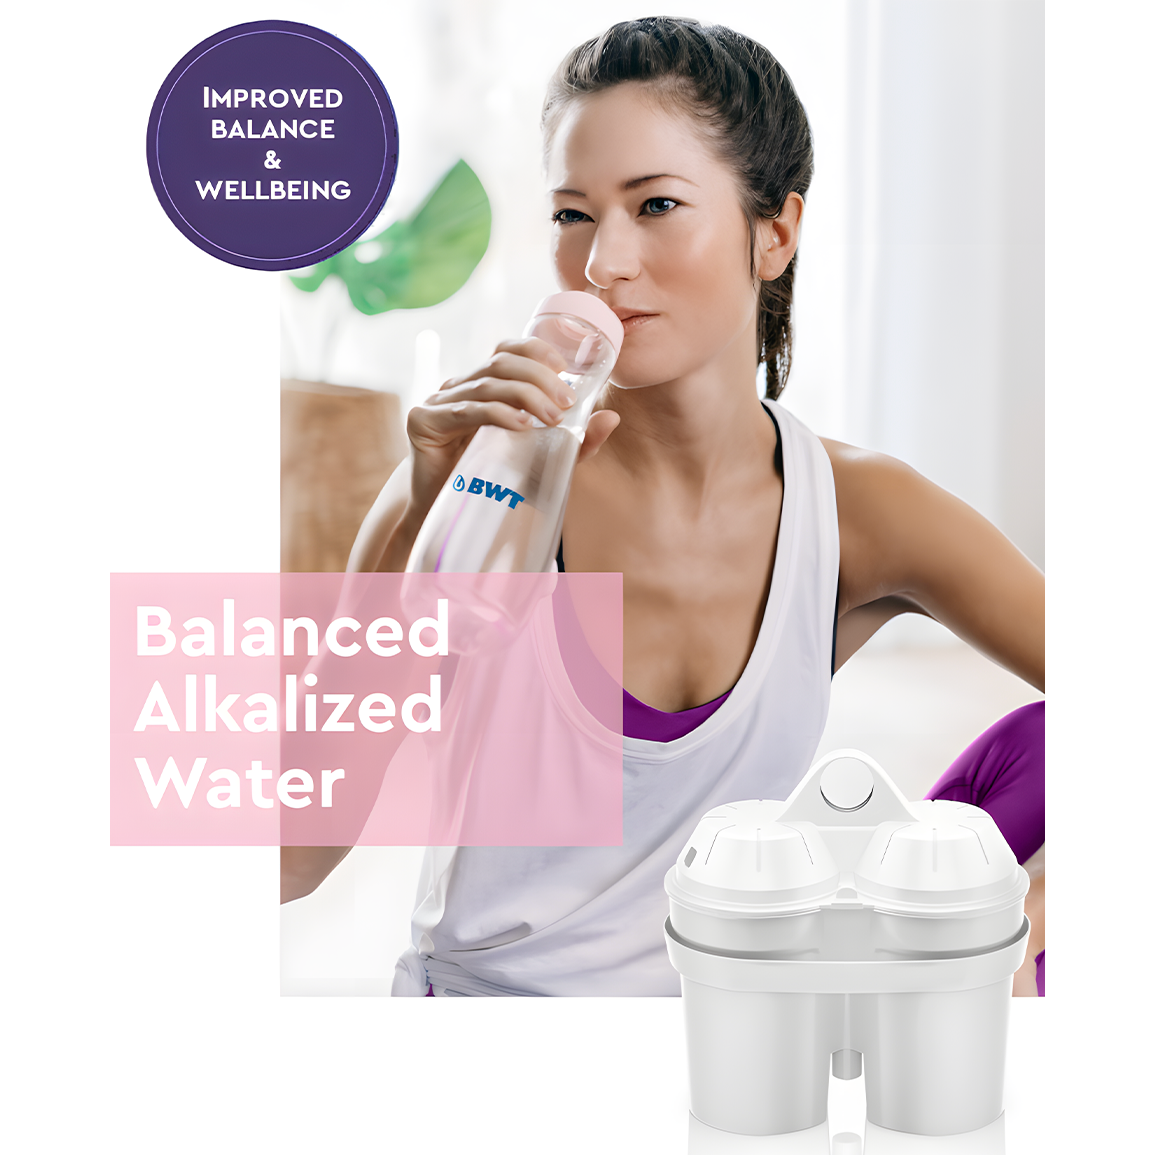 Balanced Alkalized Water